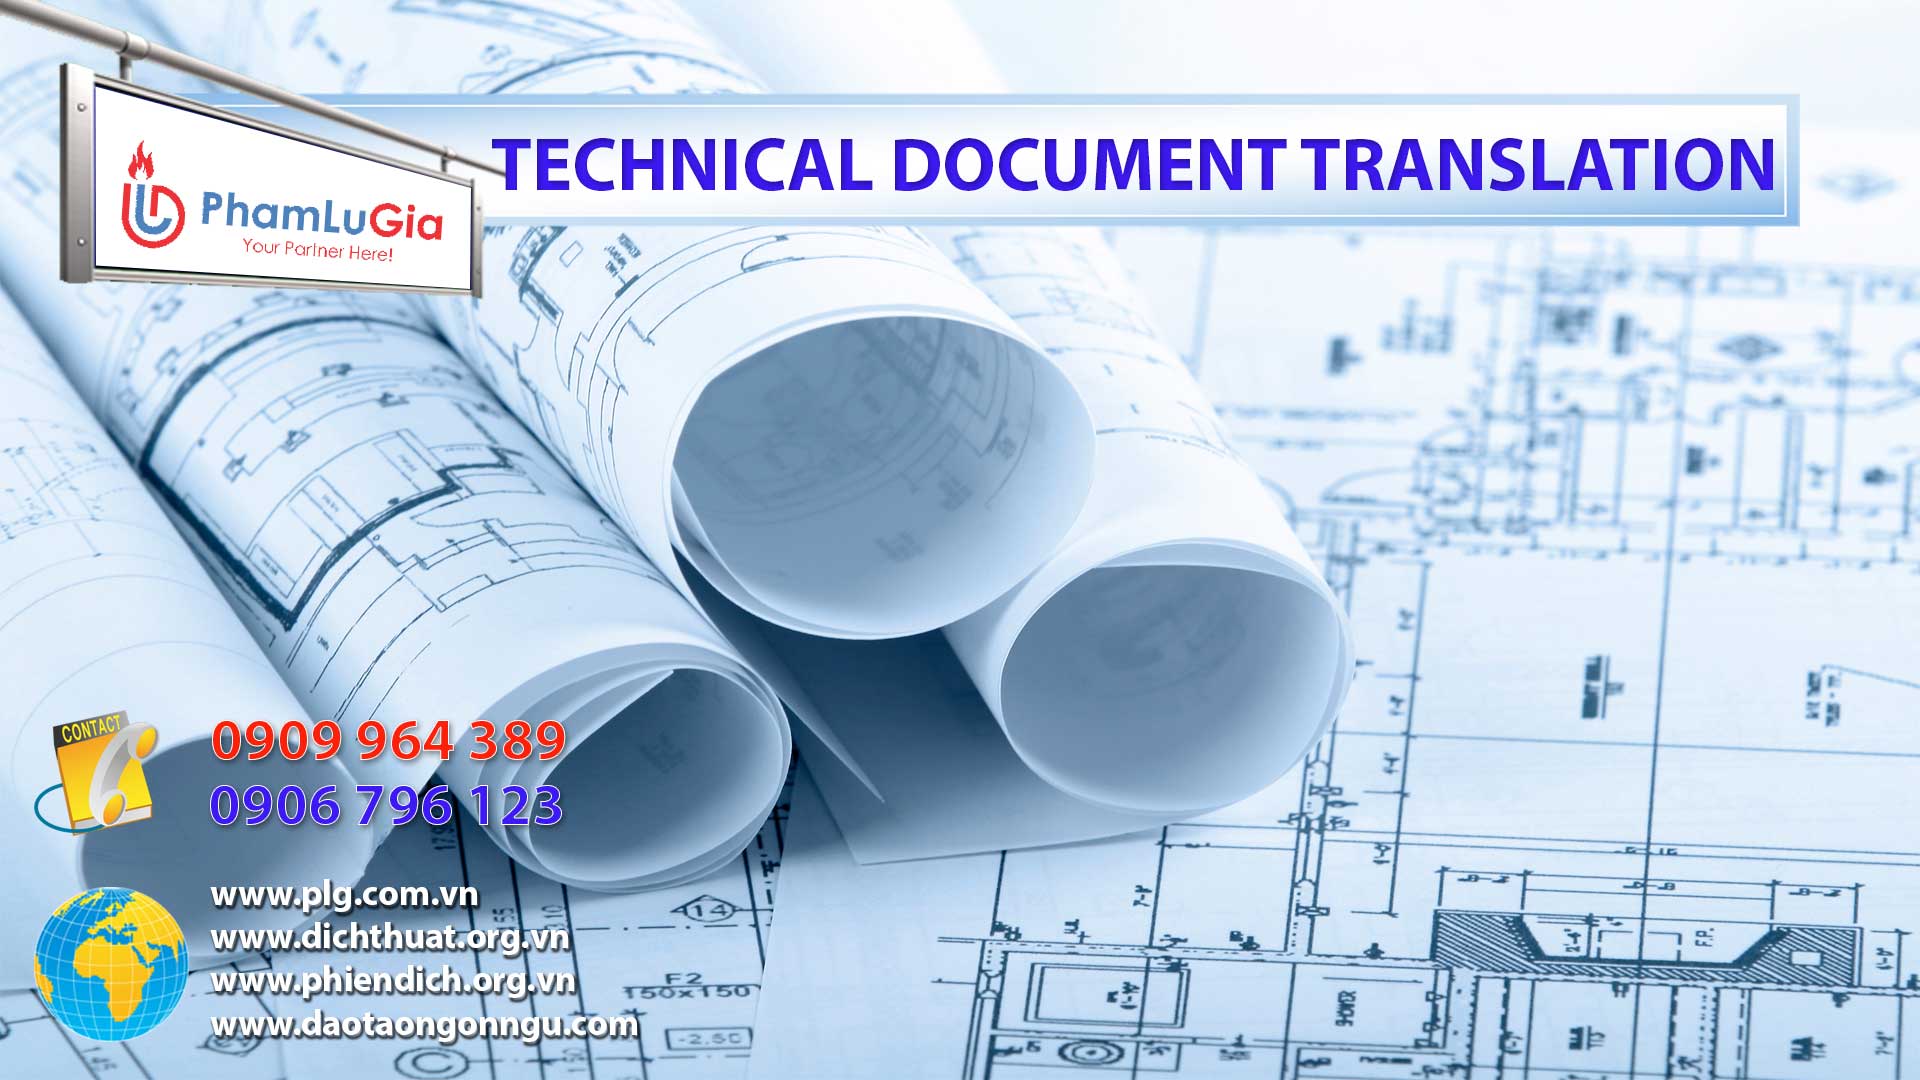 Technical Document Translation